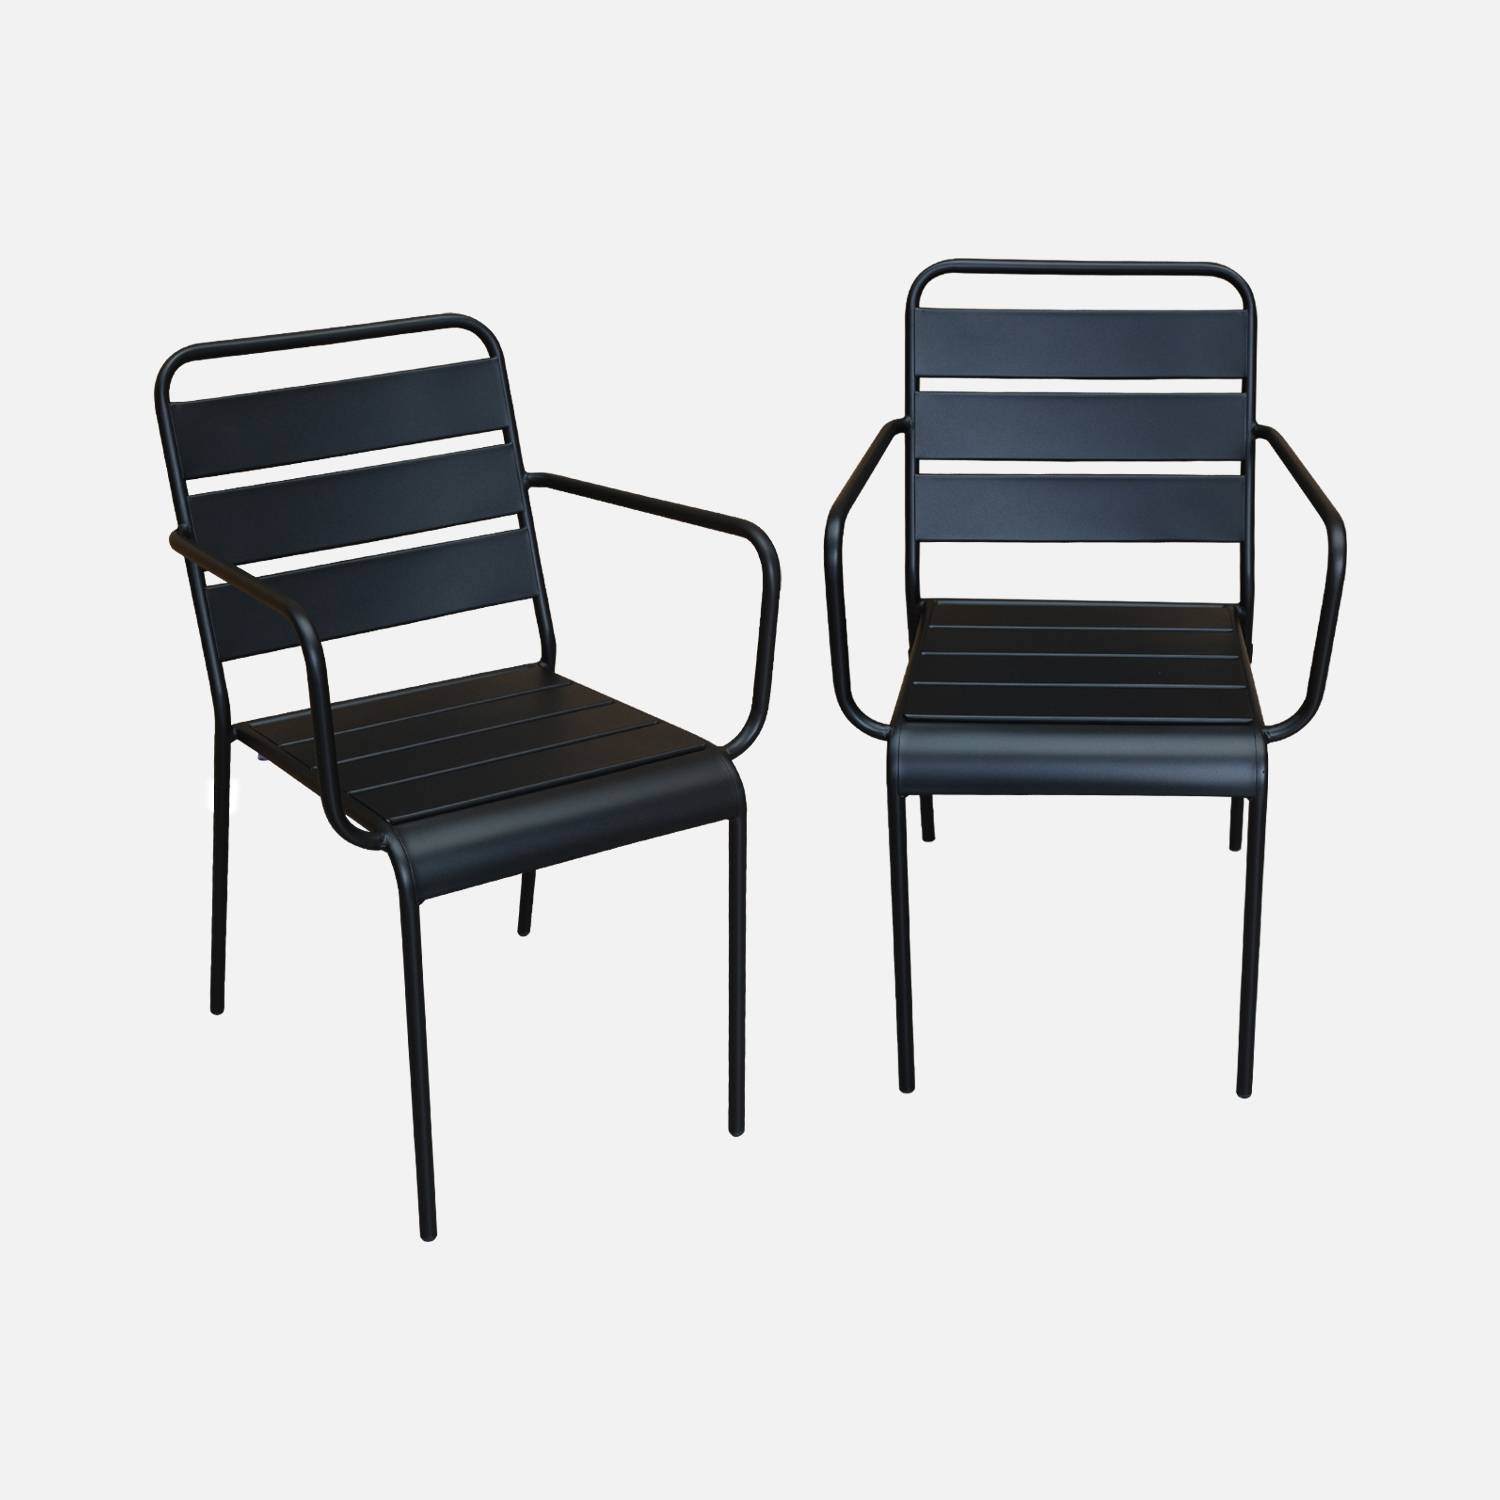 2er Set stapelbare Sessel aus Metall in schwarz l sweeek